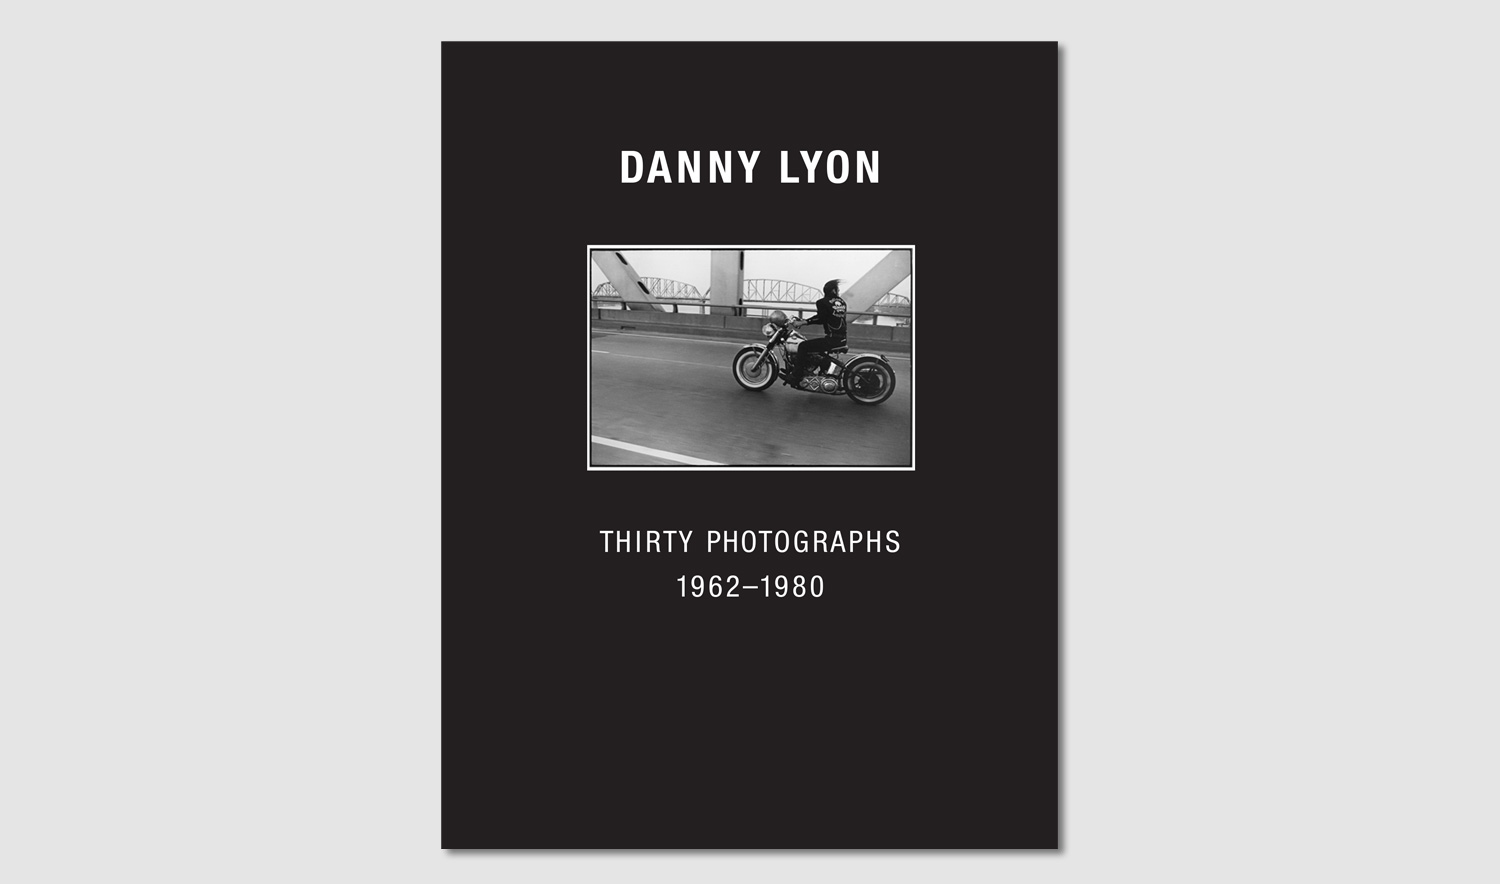 Danny Lyon: Thirty Photographs 1962-1980